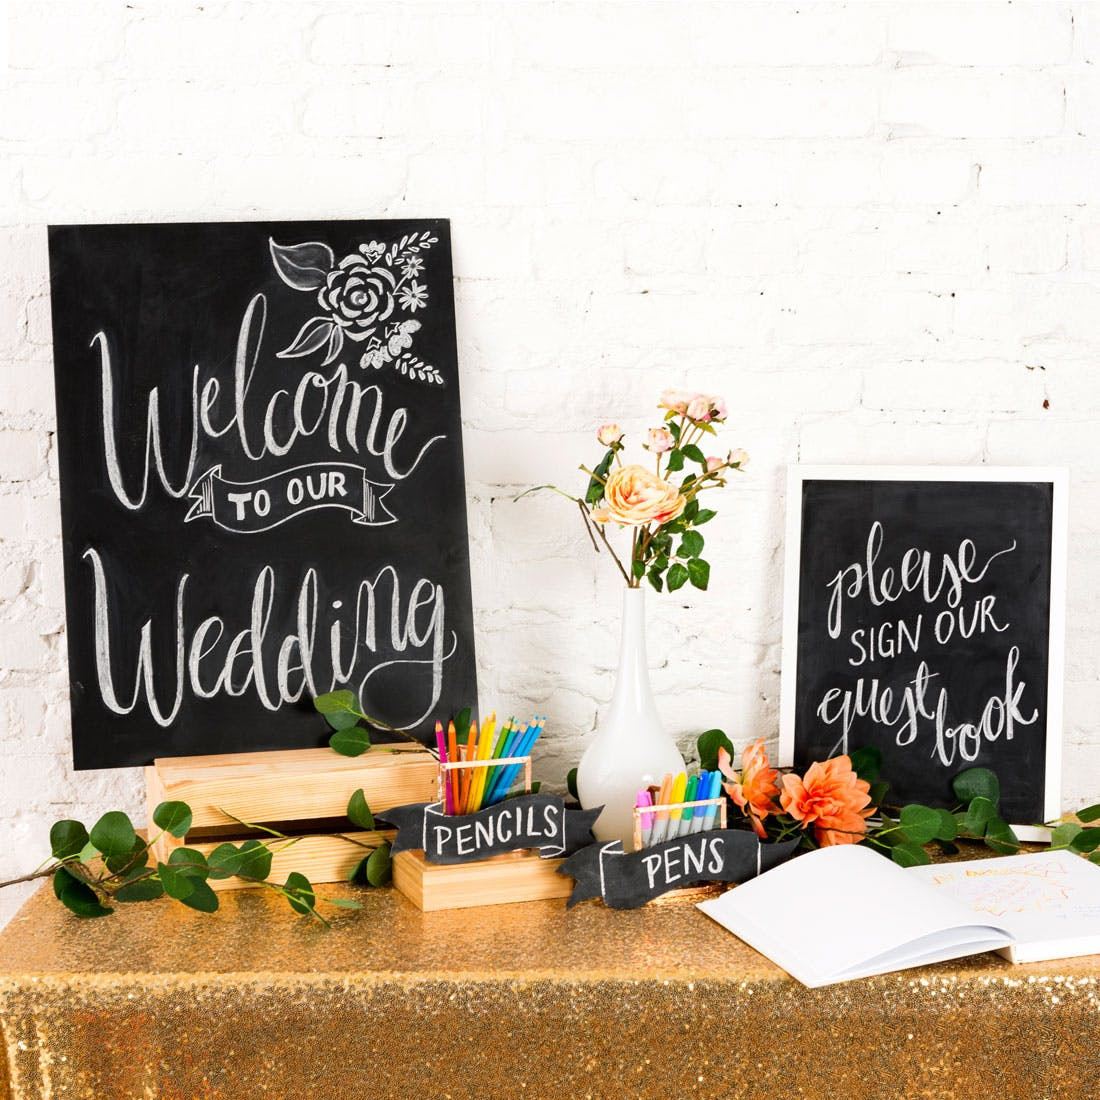 DIY Wedding Chalkboard Signs
 3 Cheap and Easy Ways to DIY Chalkboard Wedding Signs